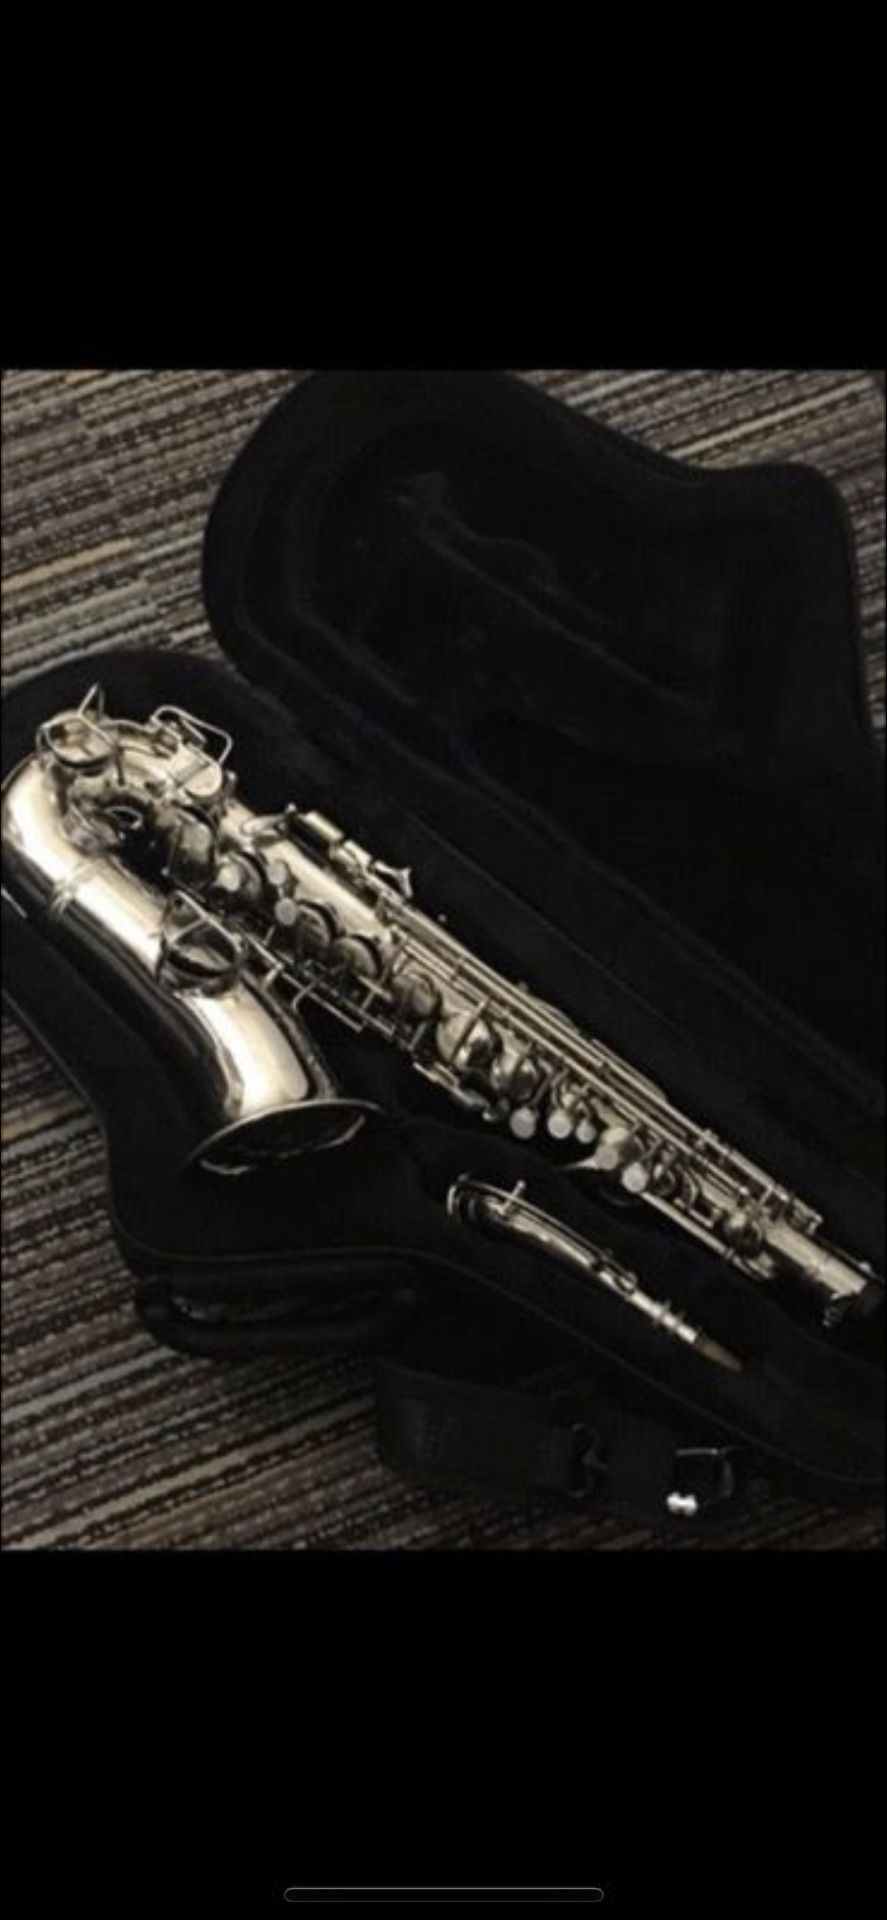 Conn Transitional 1930 saxophone